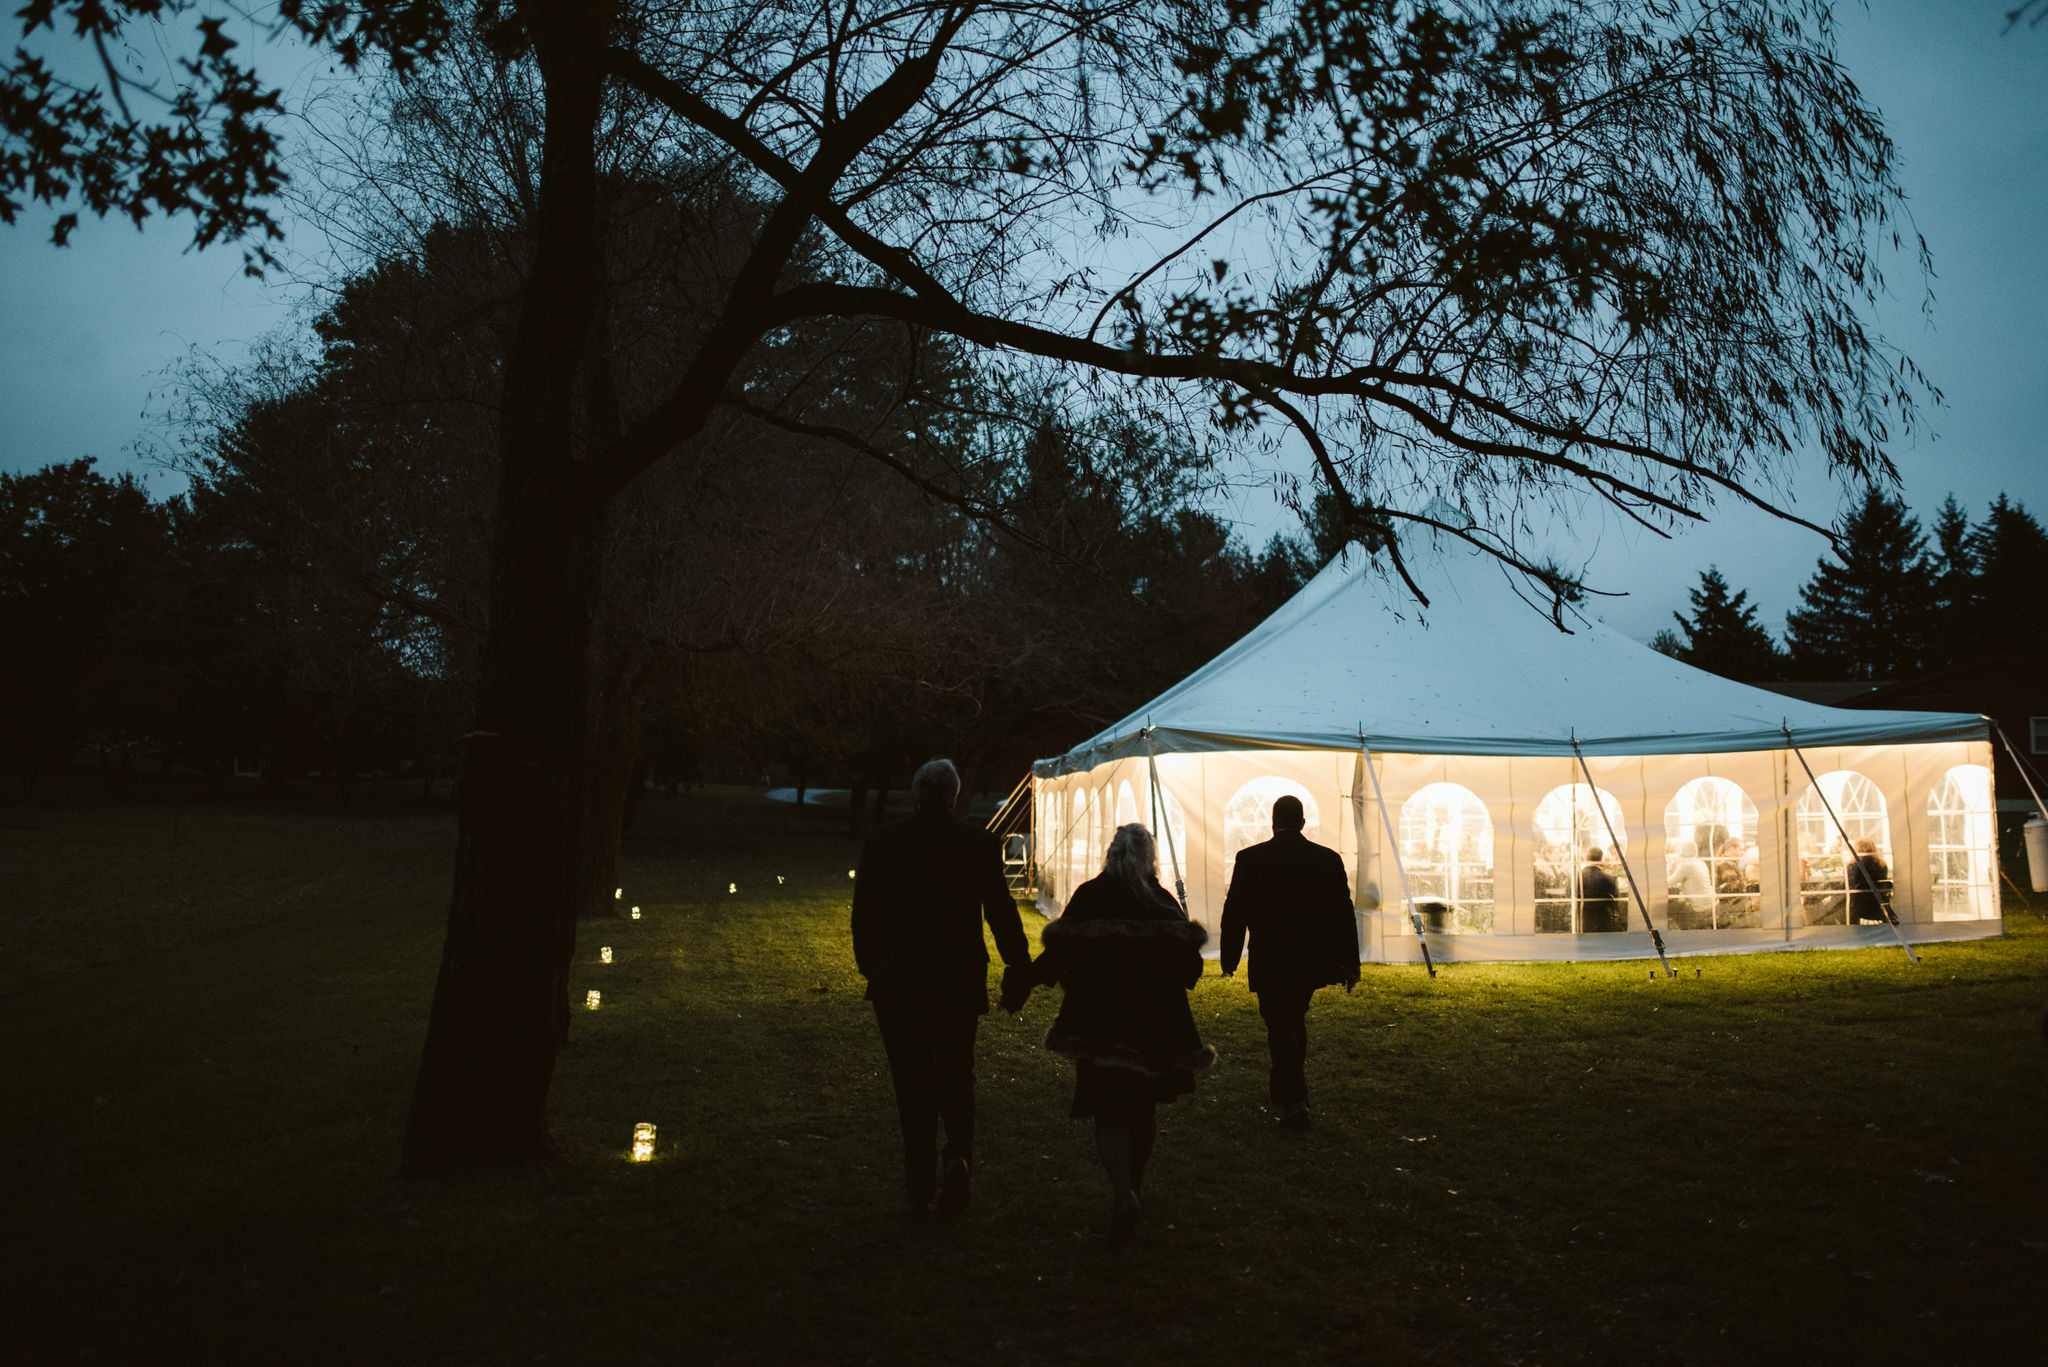  Maryland, Baltimore Wedding Photographer, Backyard Wedding, Fall, October, Dark Bohemian, Whimsical, Fun, Tent Setup for Backyard Reception, Fairy Lights in Mason Jars 